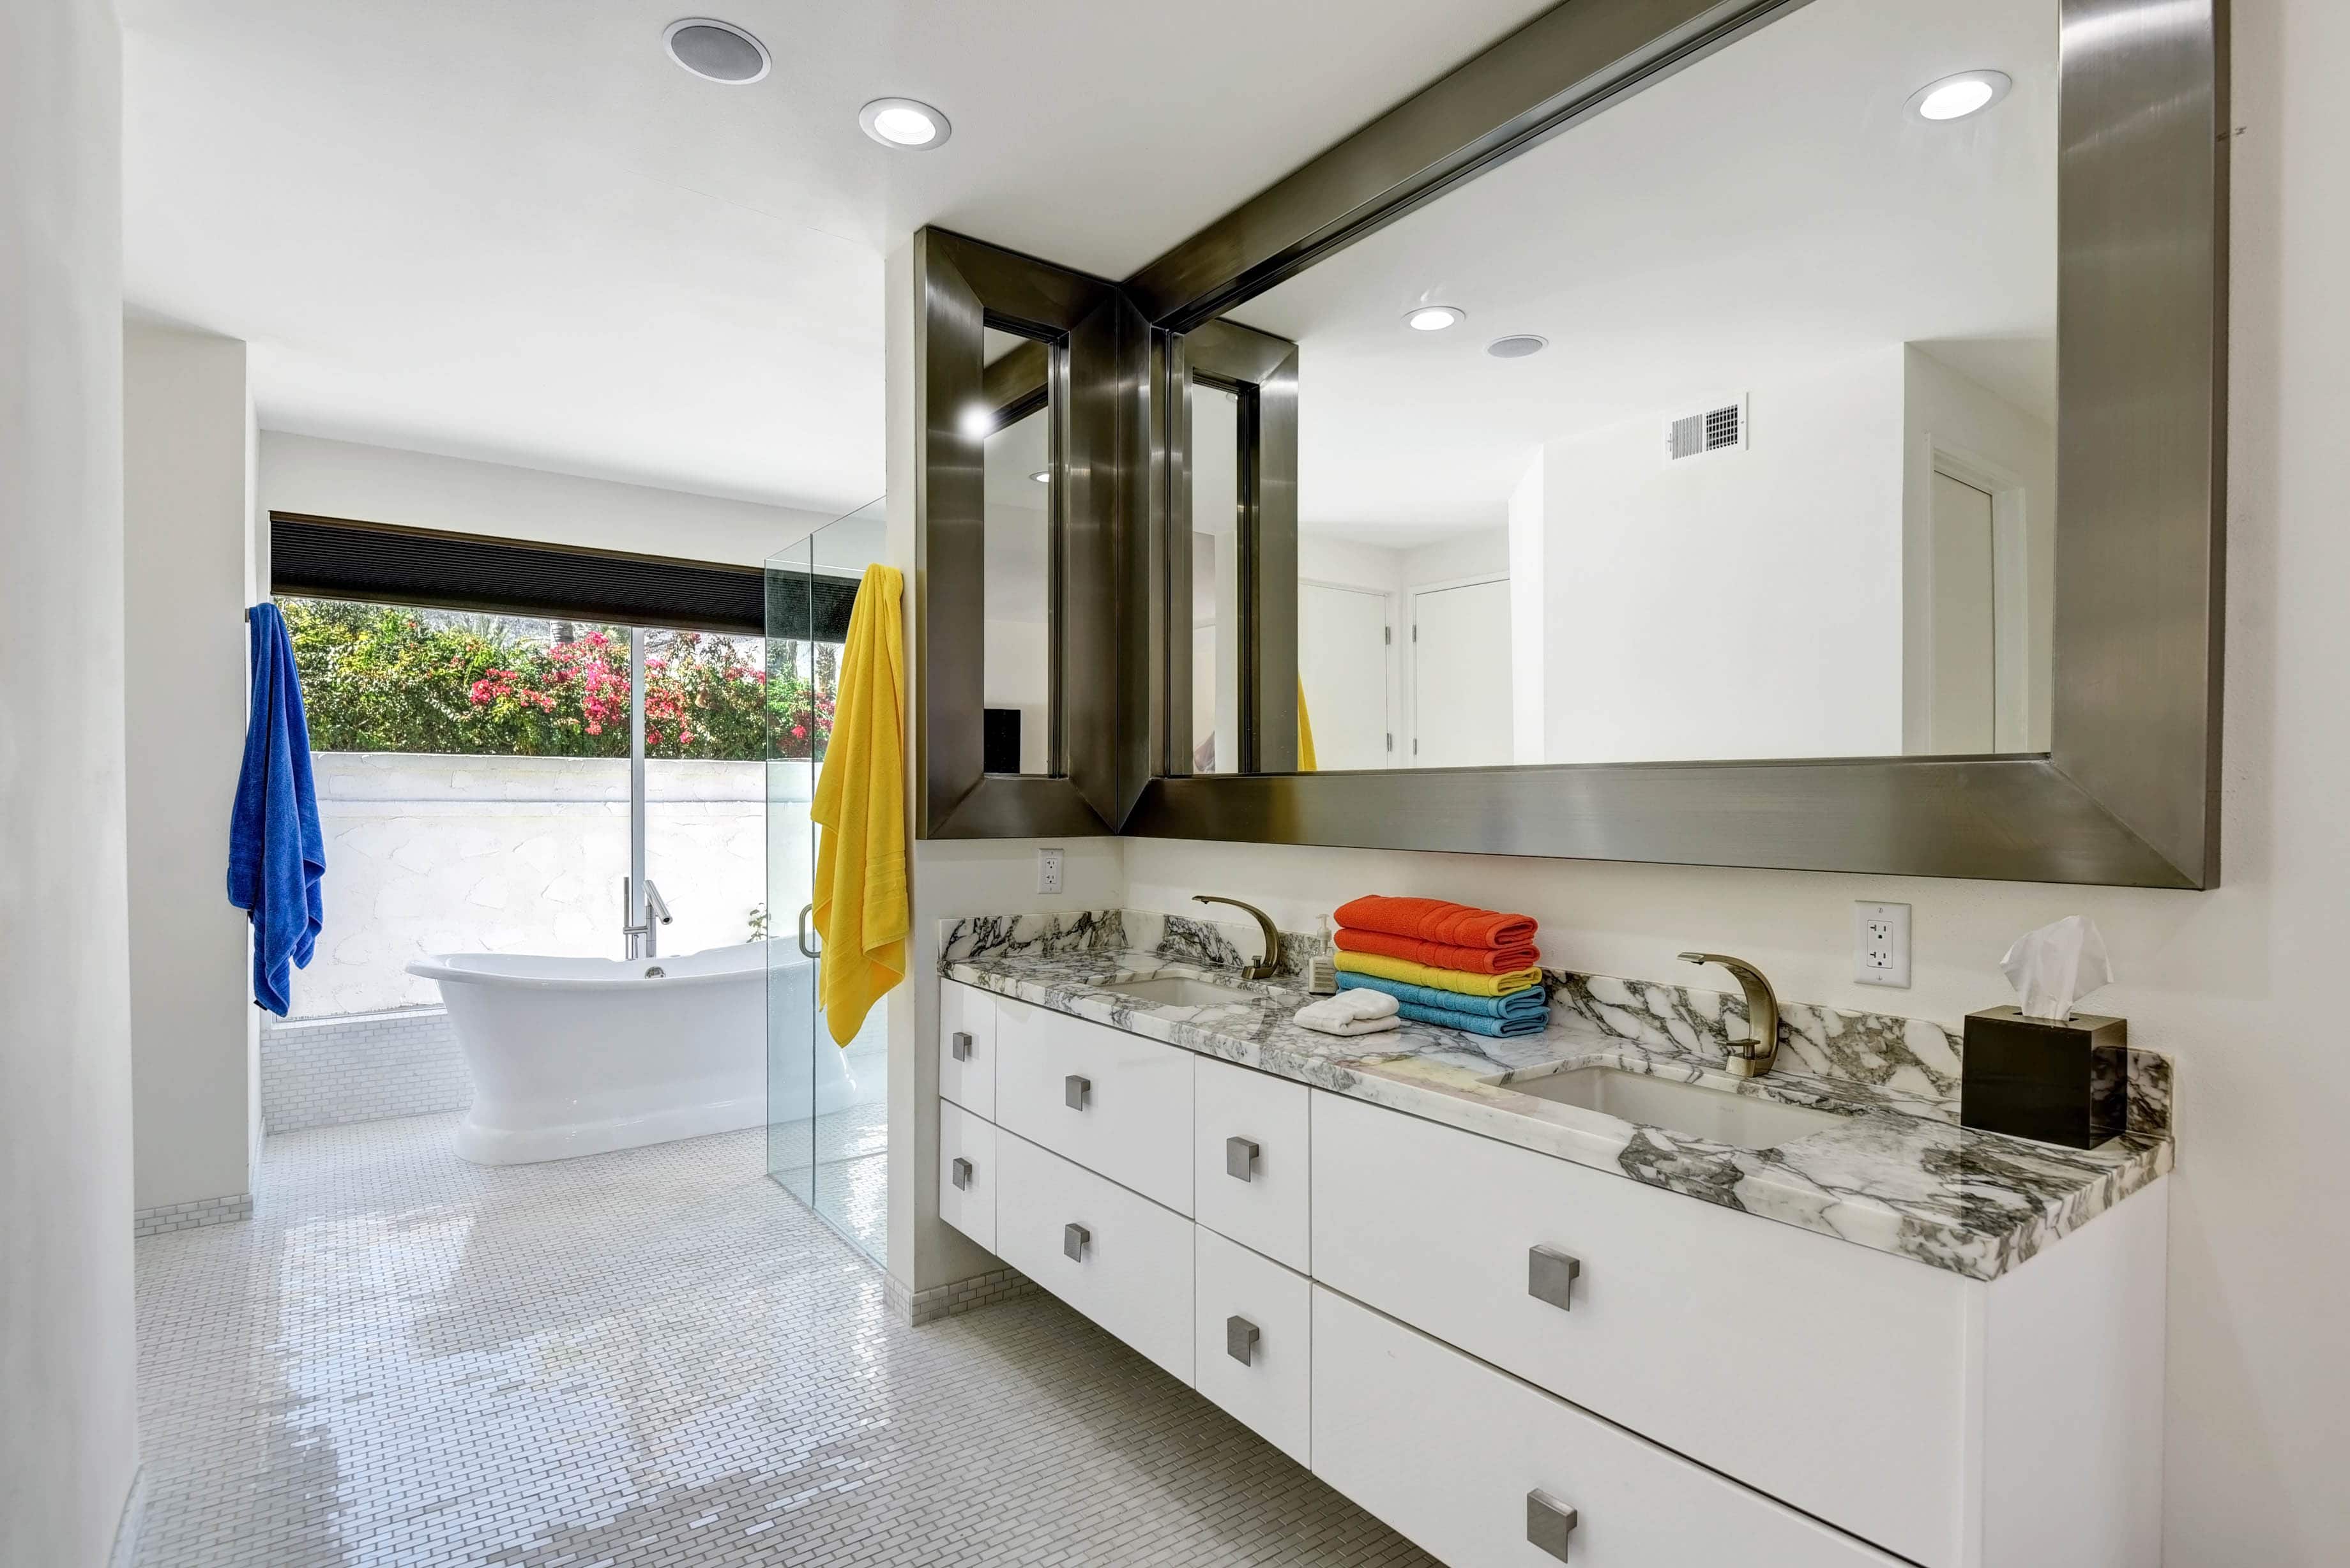 Kitchen Cabinets As Master Bathroom Vanity Hack